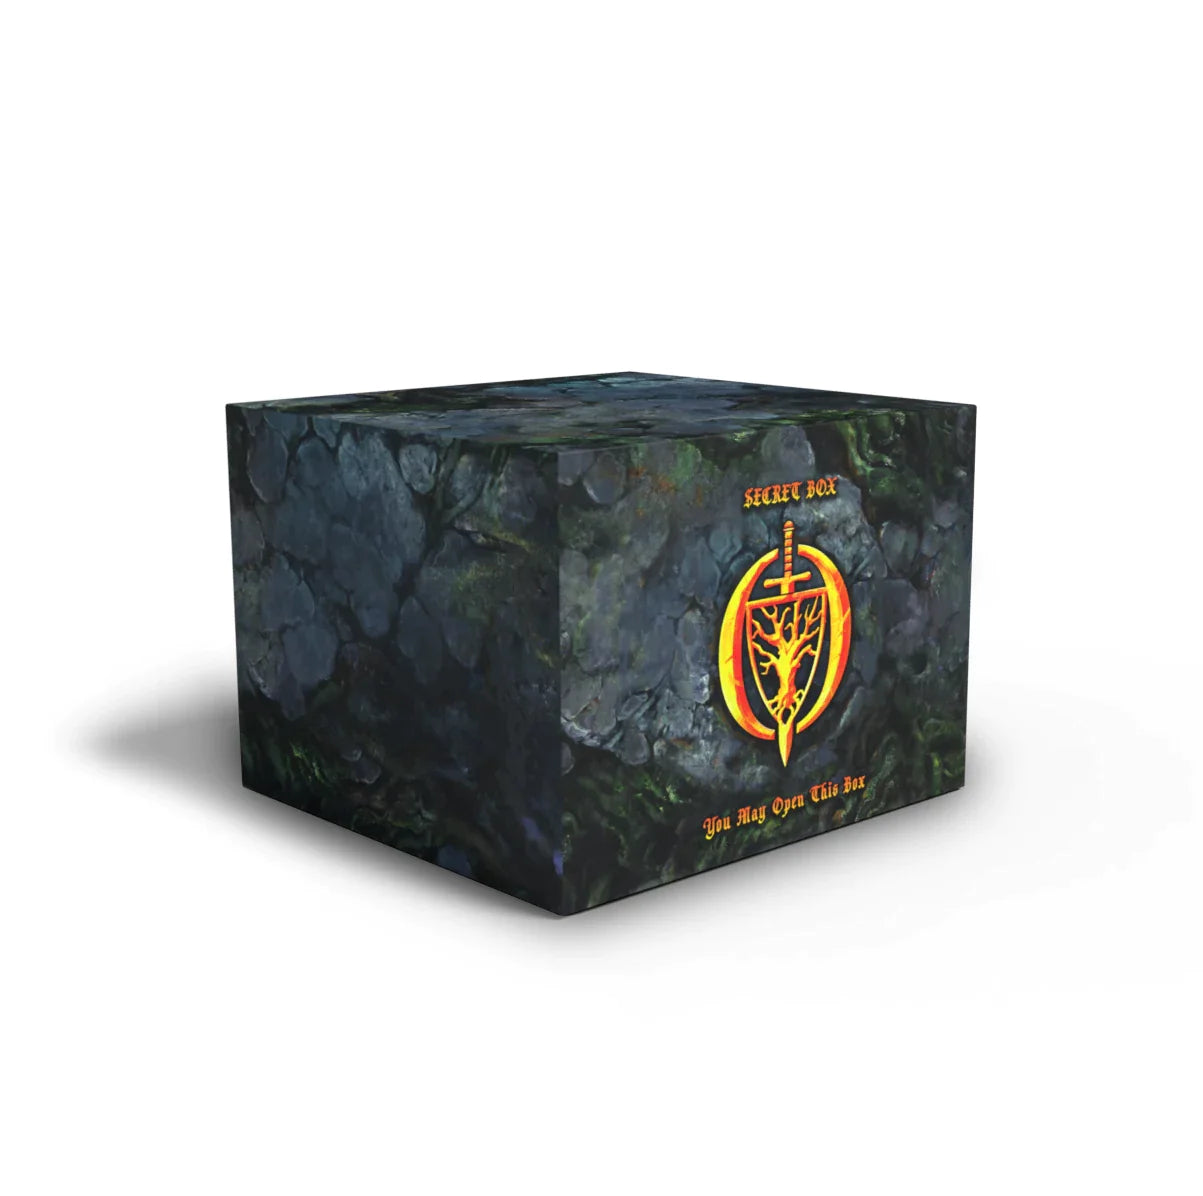 2nd Edition Secret Box